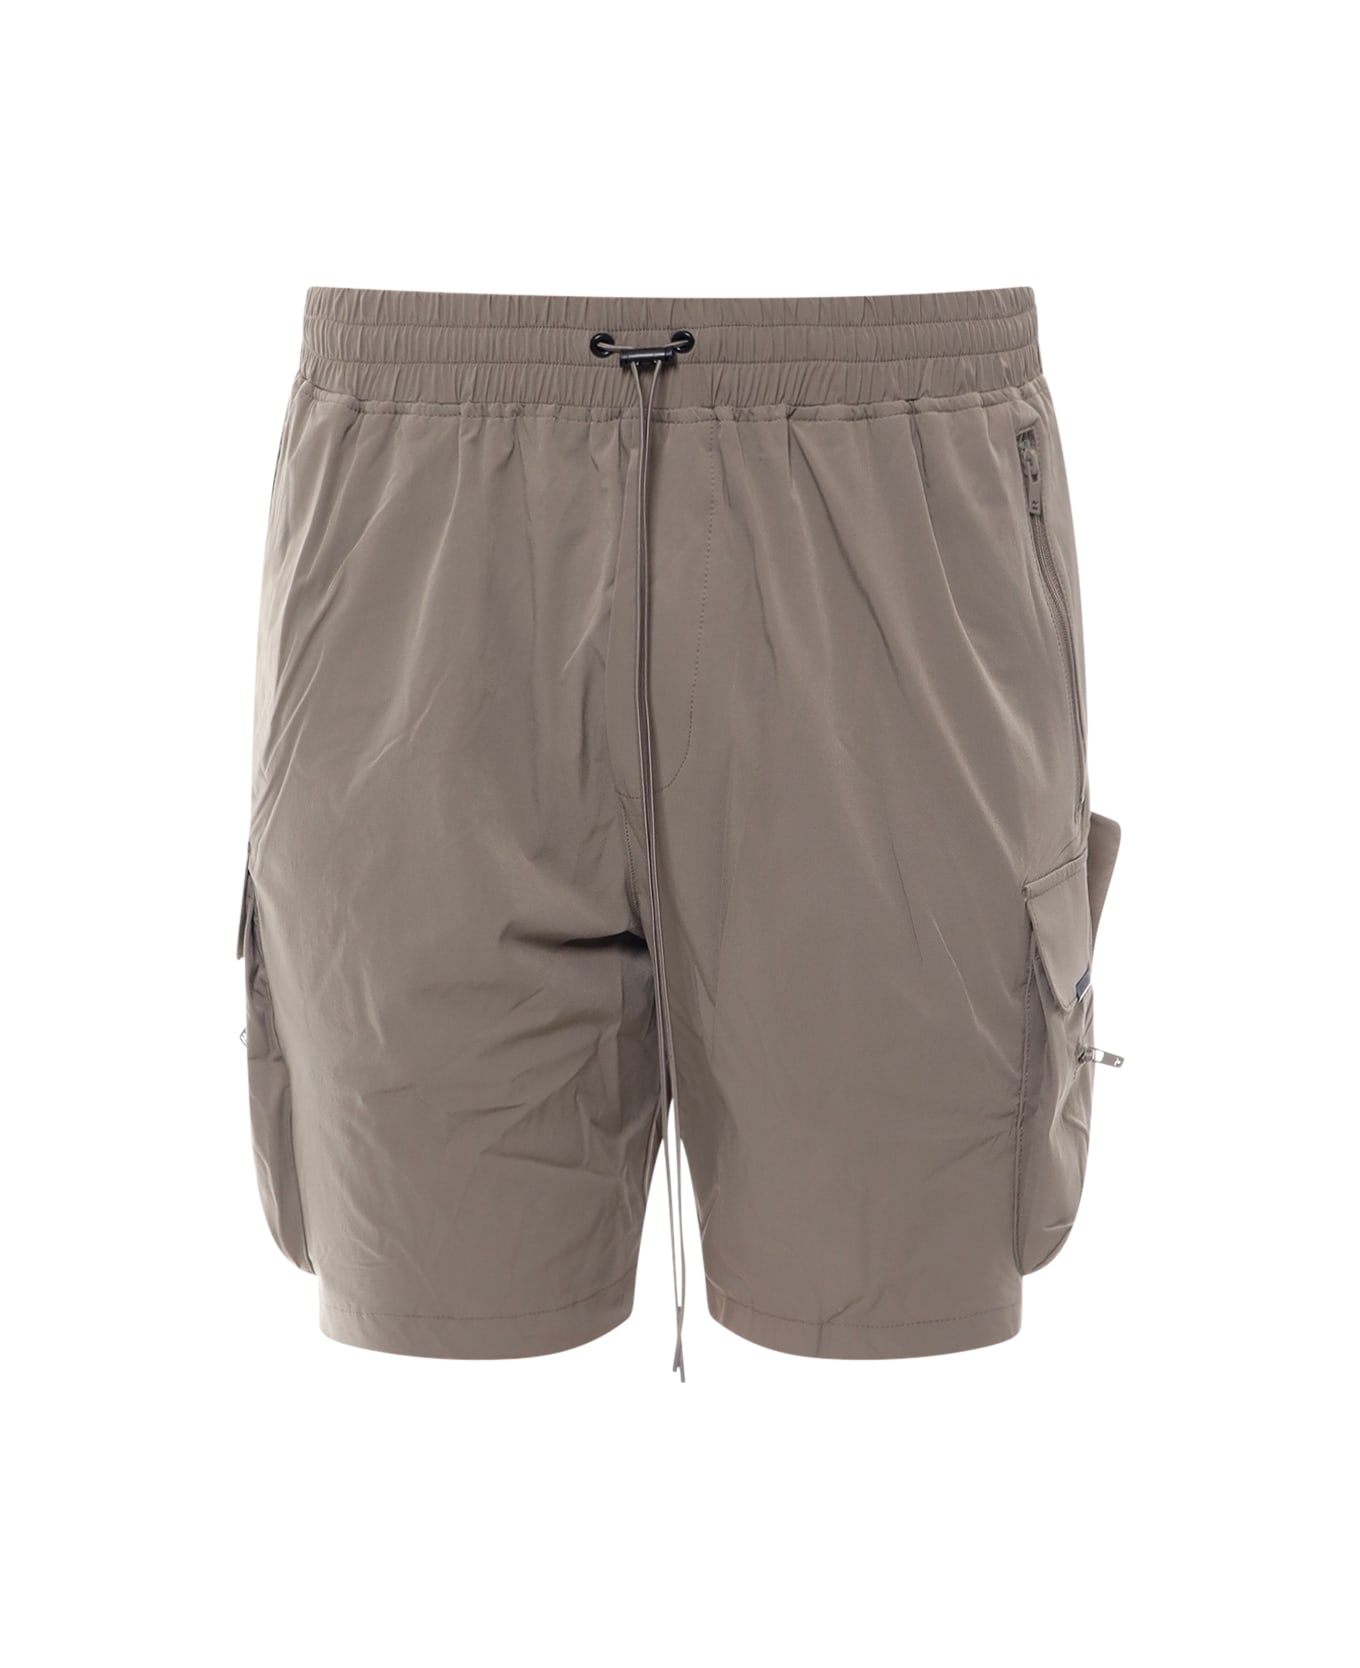 REPRESENT Bermuda Shorts - Beige ショートパンツ